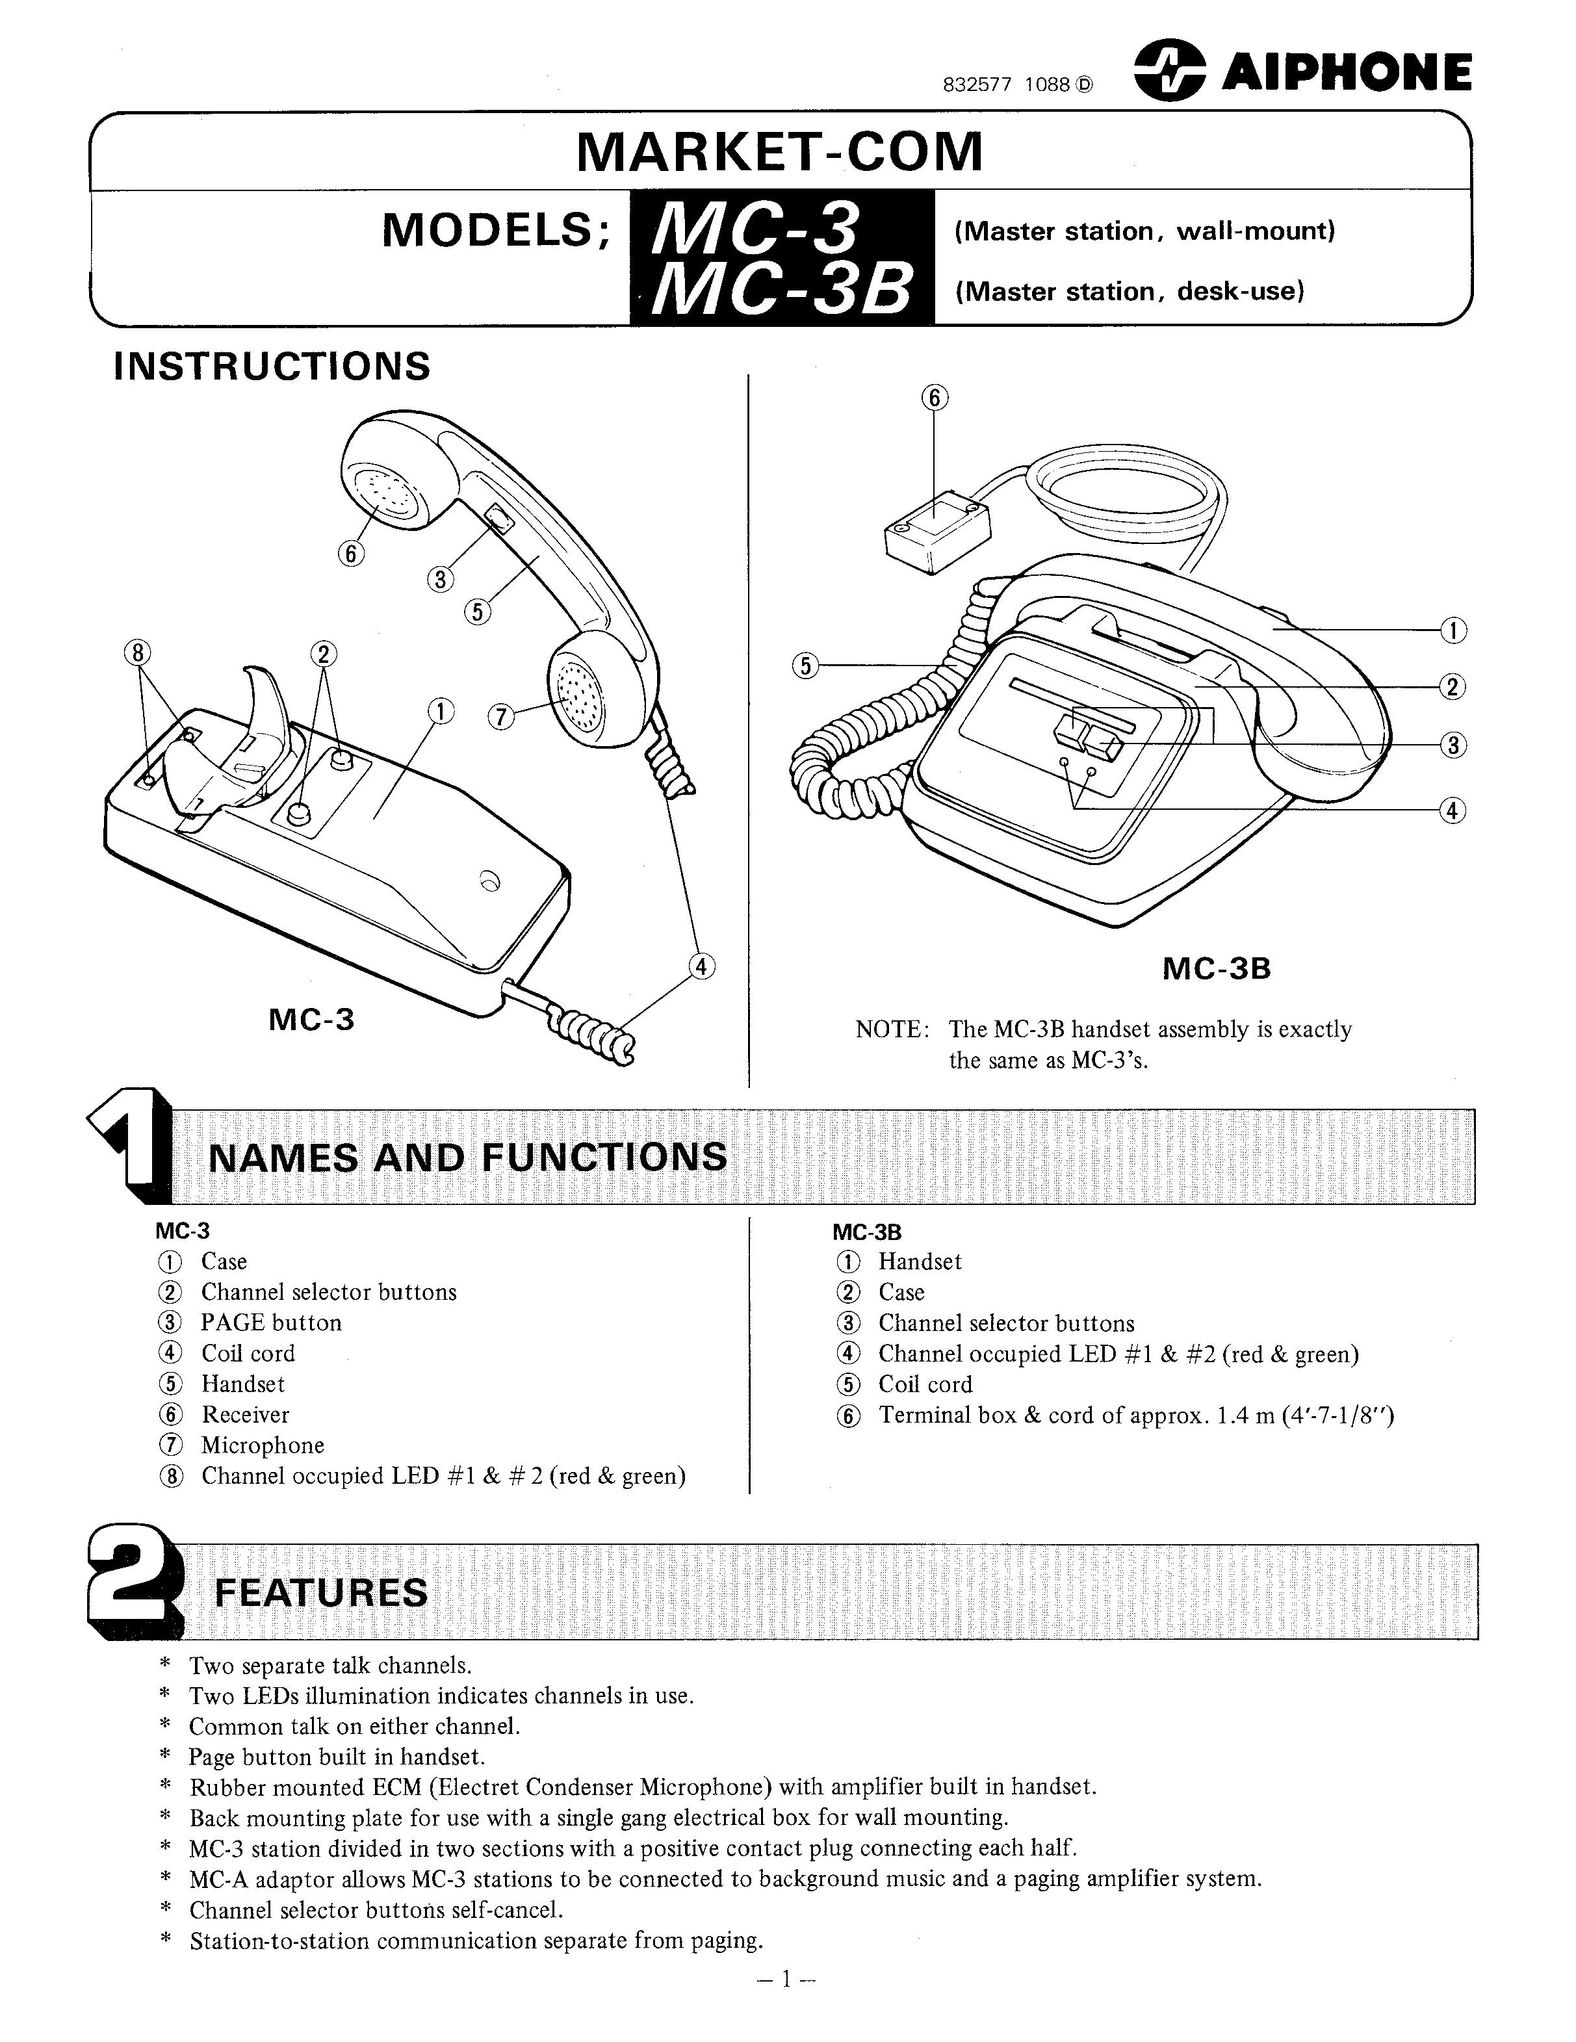 Aiphone MC-3 Telephone User Manual